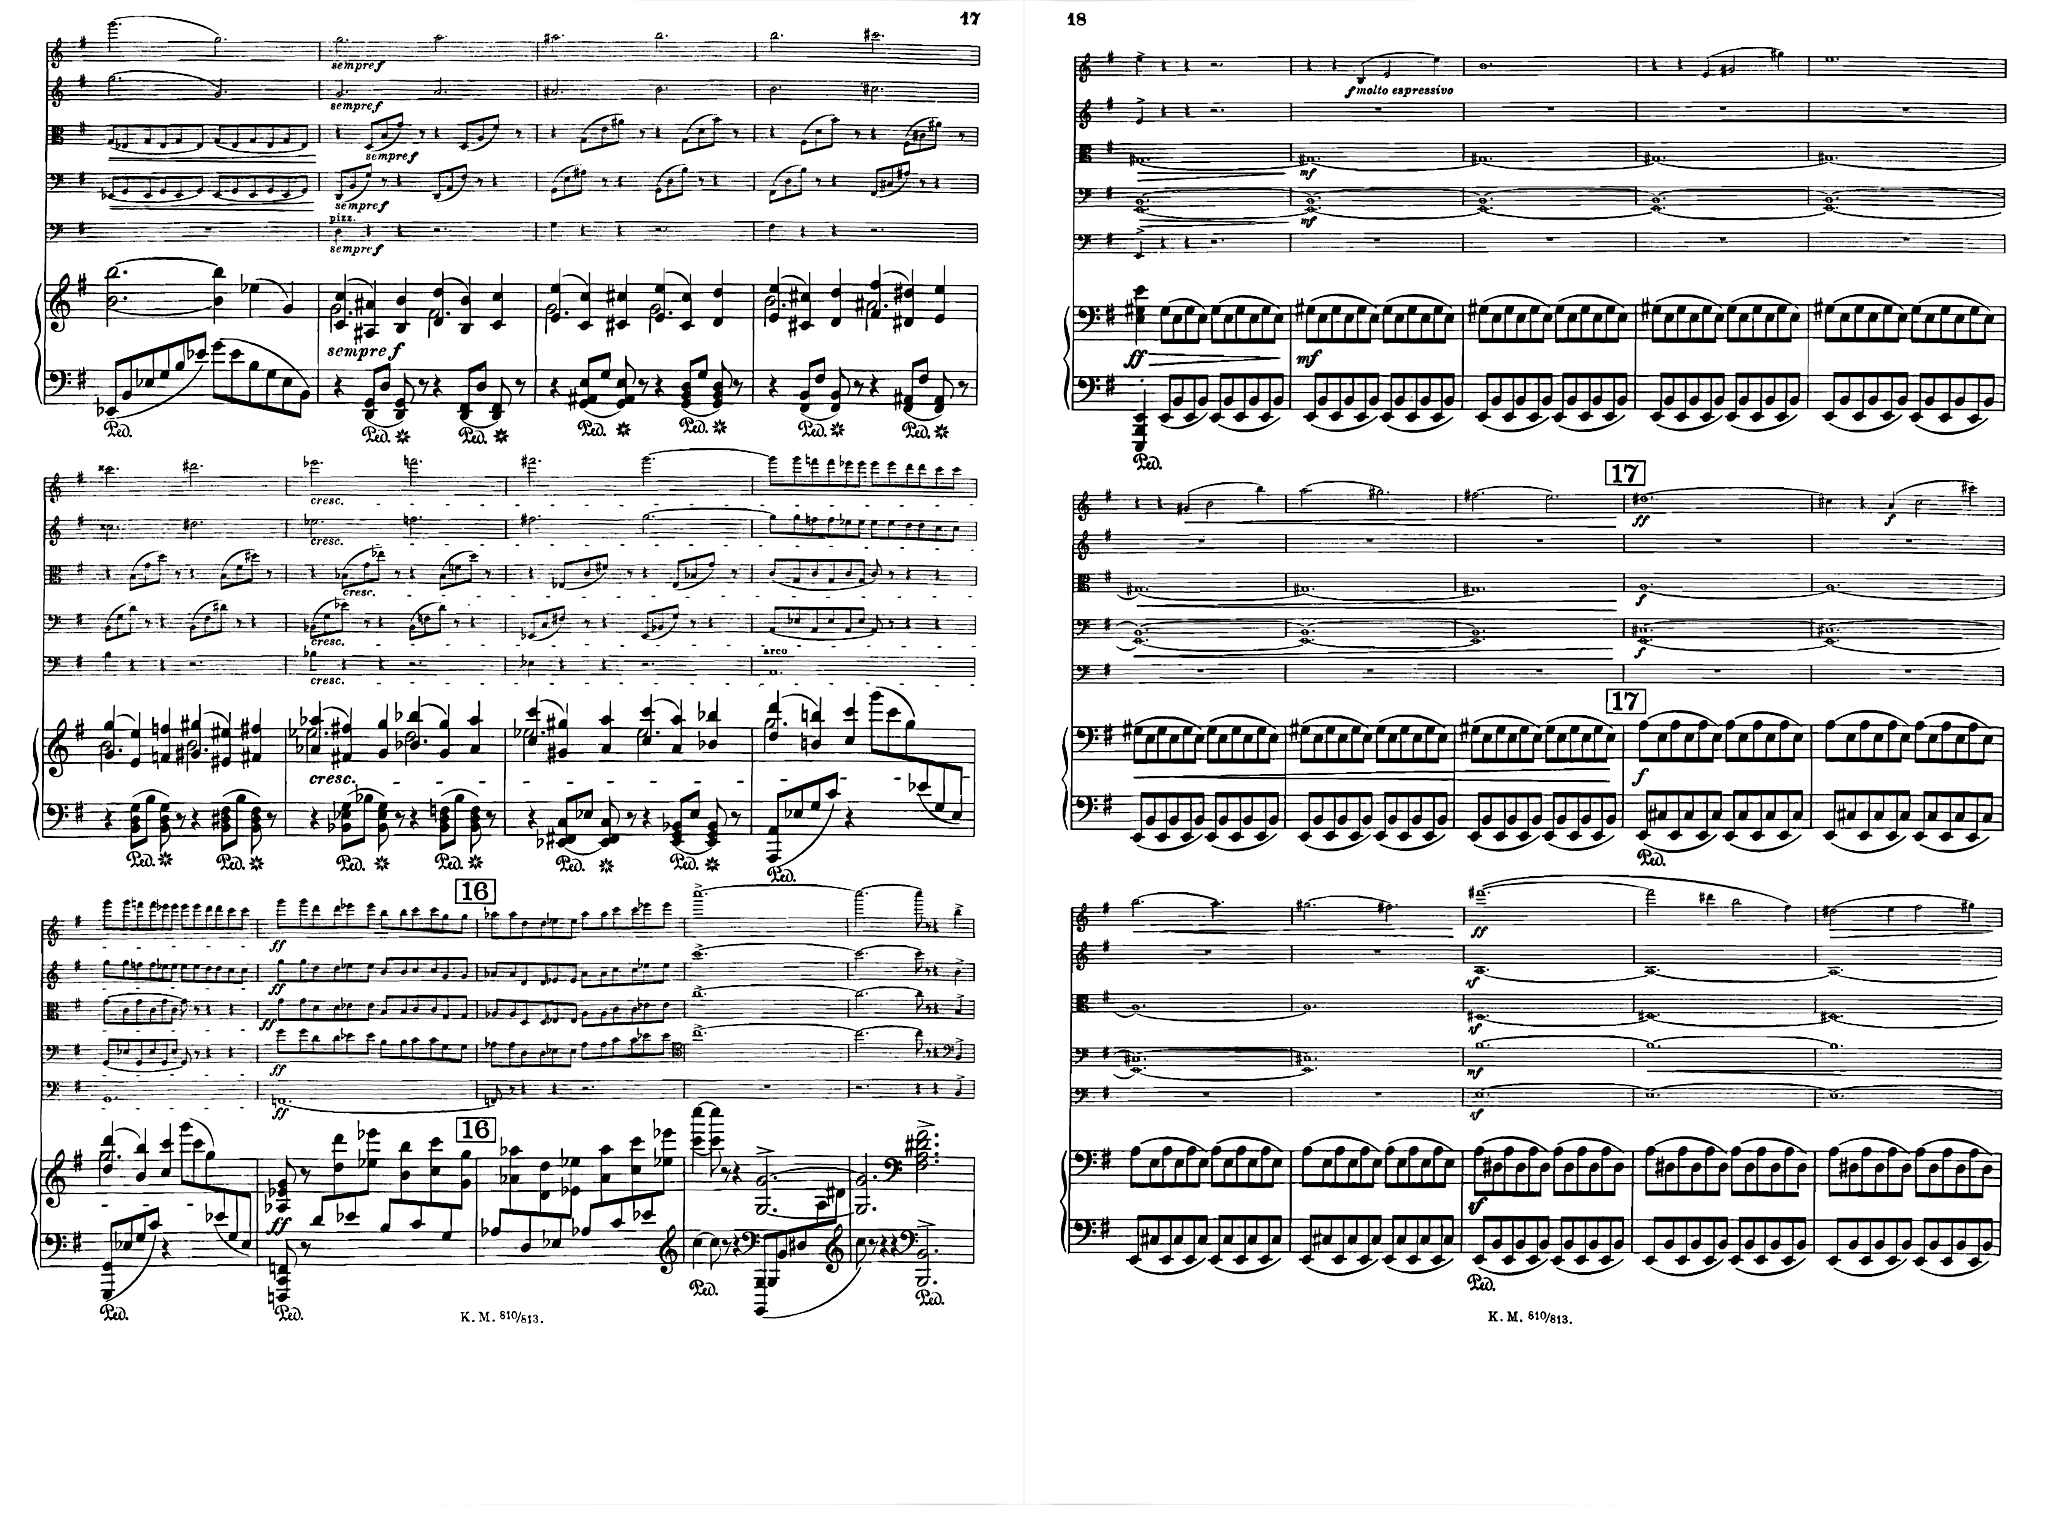 Piano sheet music on an iPad (in landscape orientation), screenshot